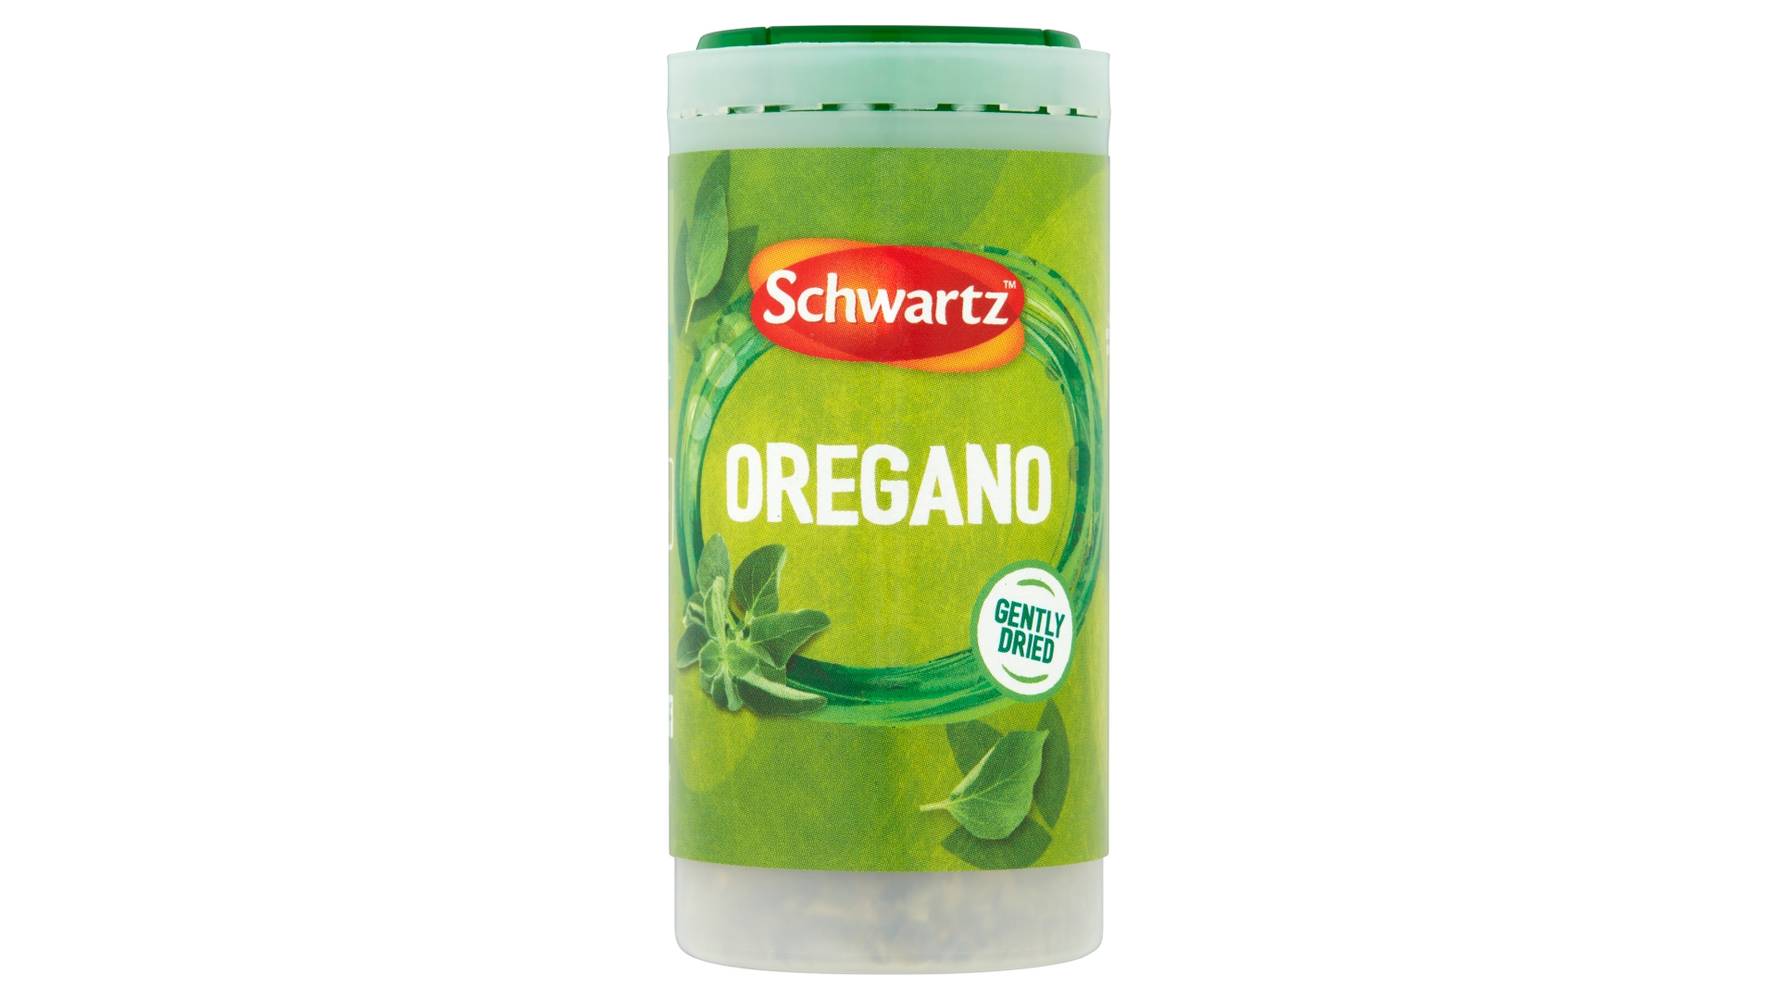 Schwartz Oregano 6g